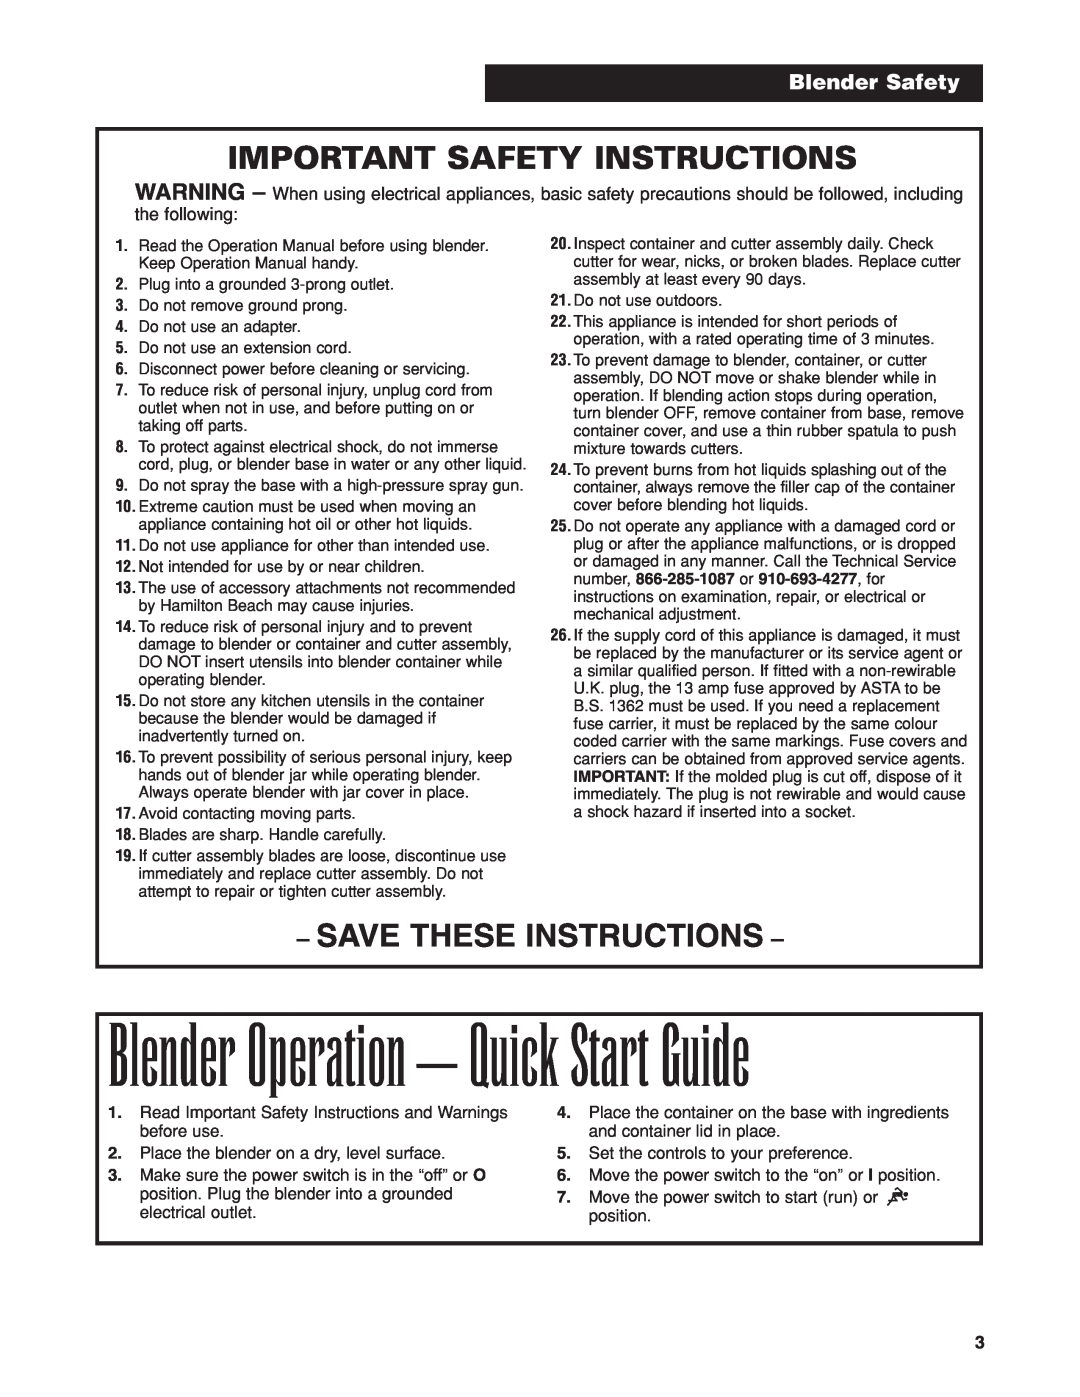 Proctor-Silex HBH450 manuel dutilisation Important Safety Instructions, Save These Instructions, Blender Safety 